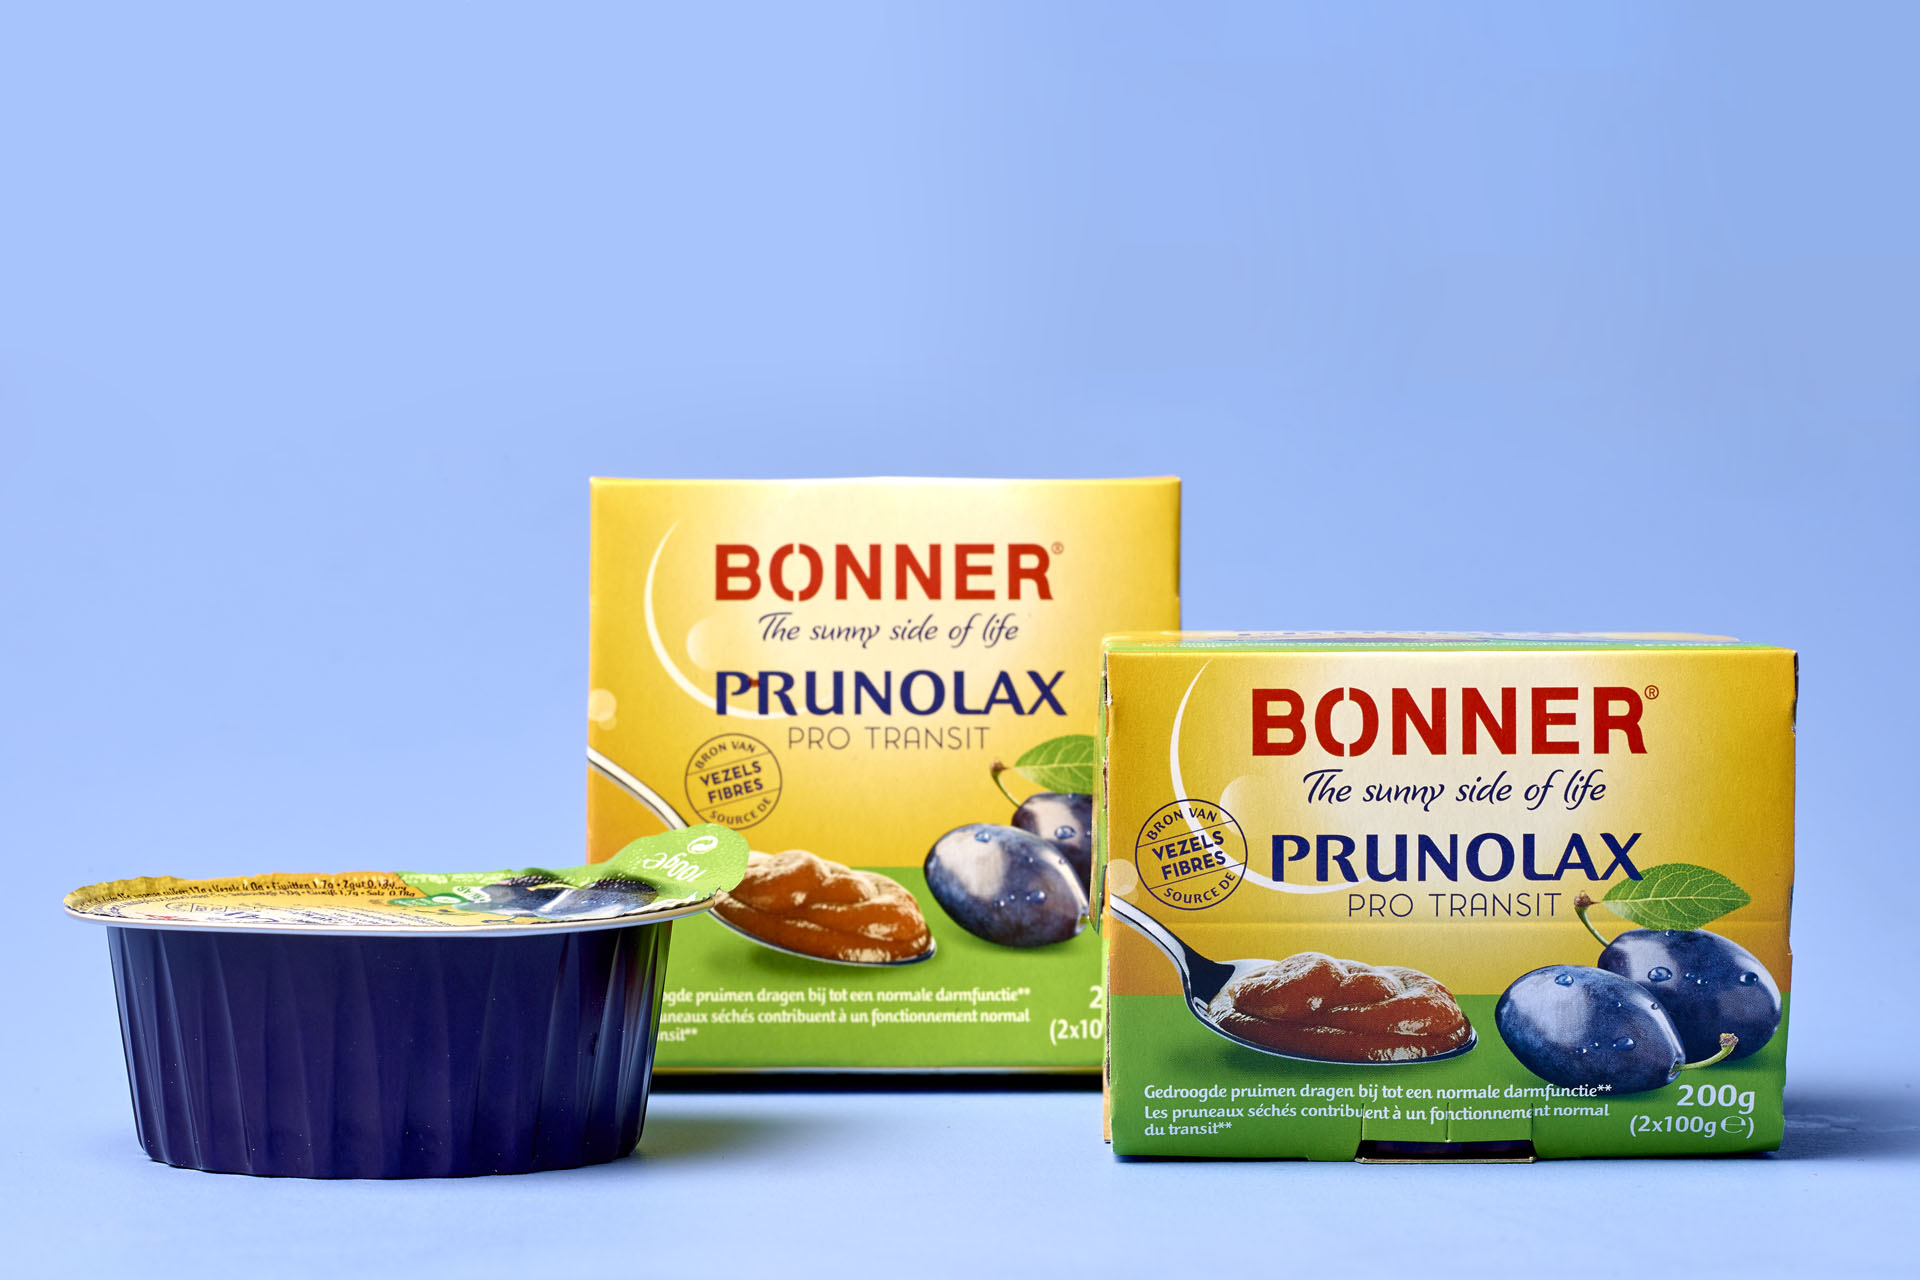 Bonner prunolax brand relift by DesignRepublic, branding and packaging design agency Belgium